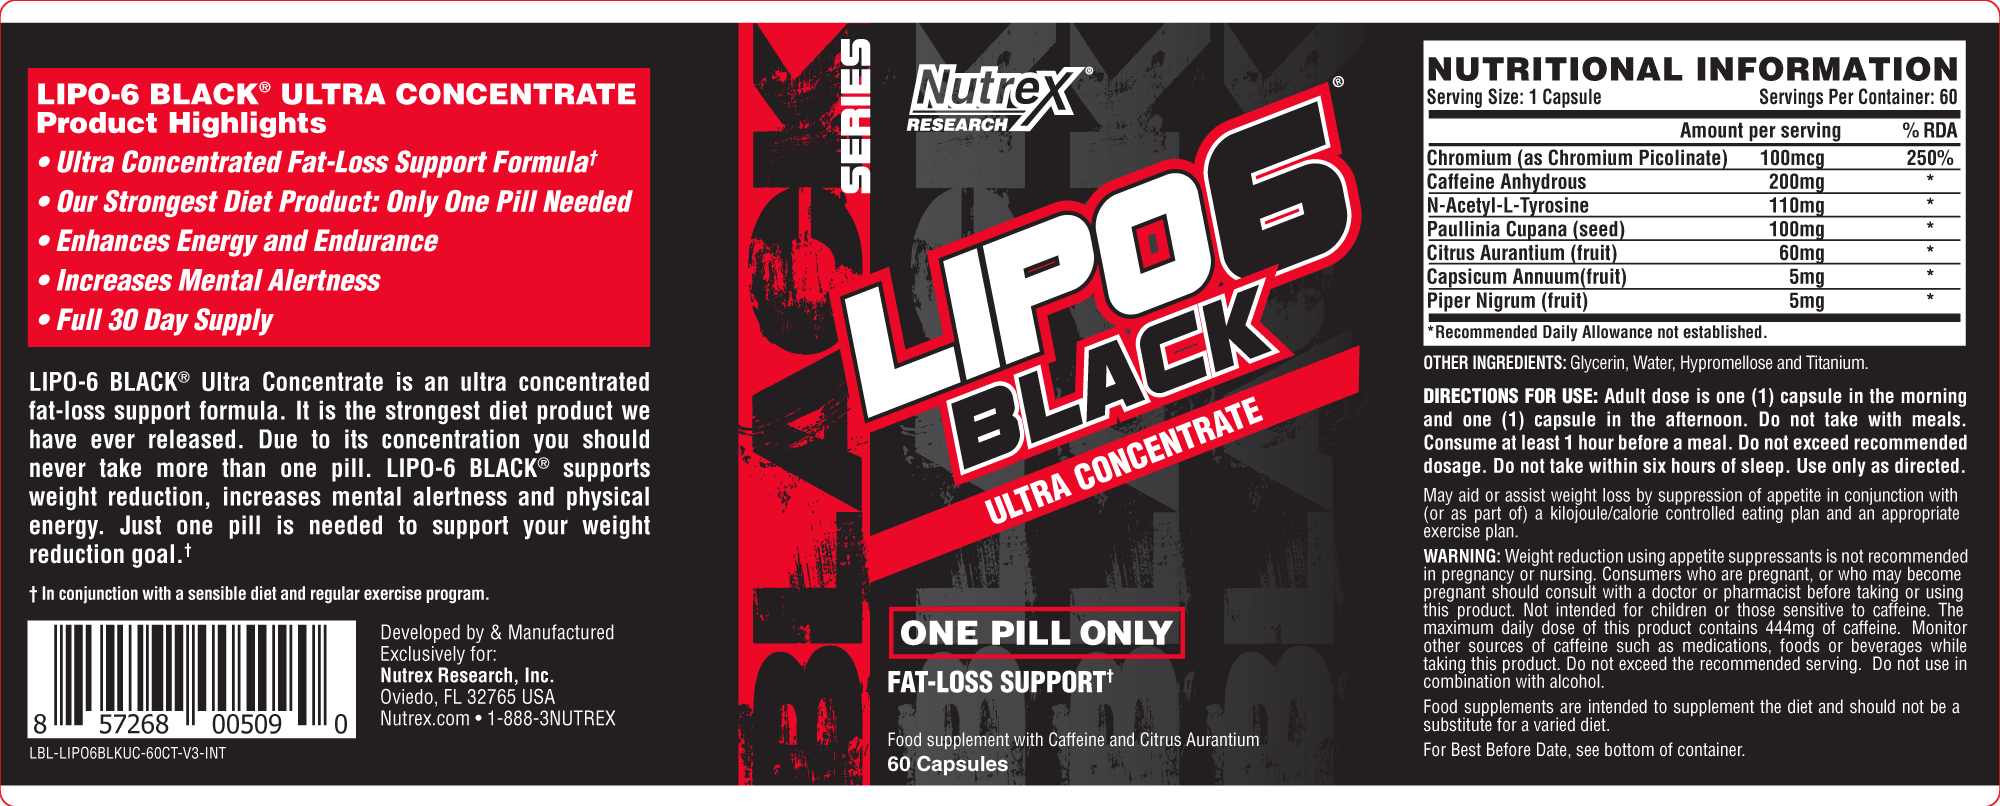 Nutrex Lipo-6 Black Fat Burner